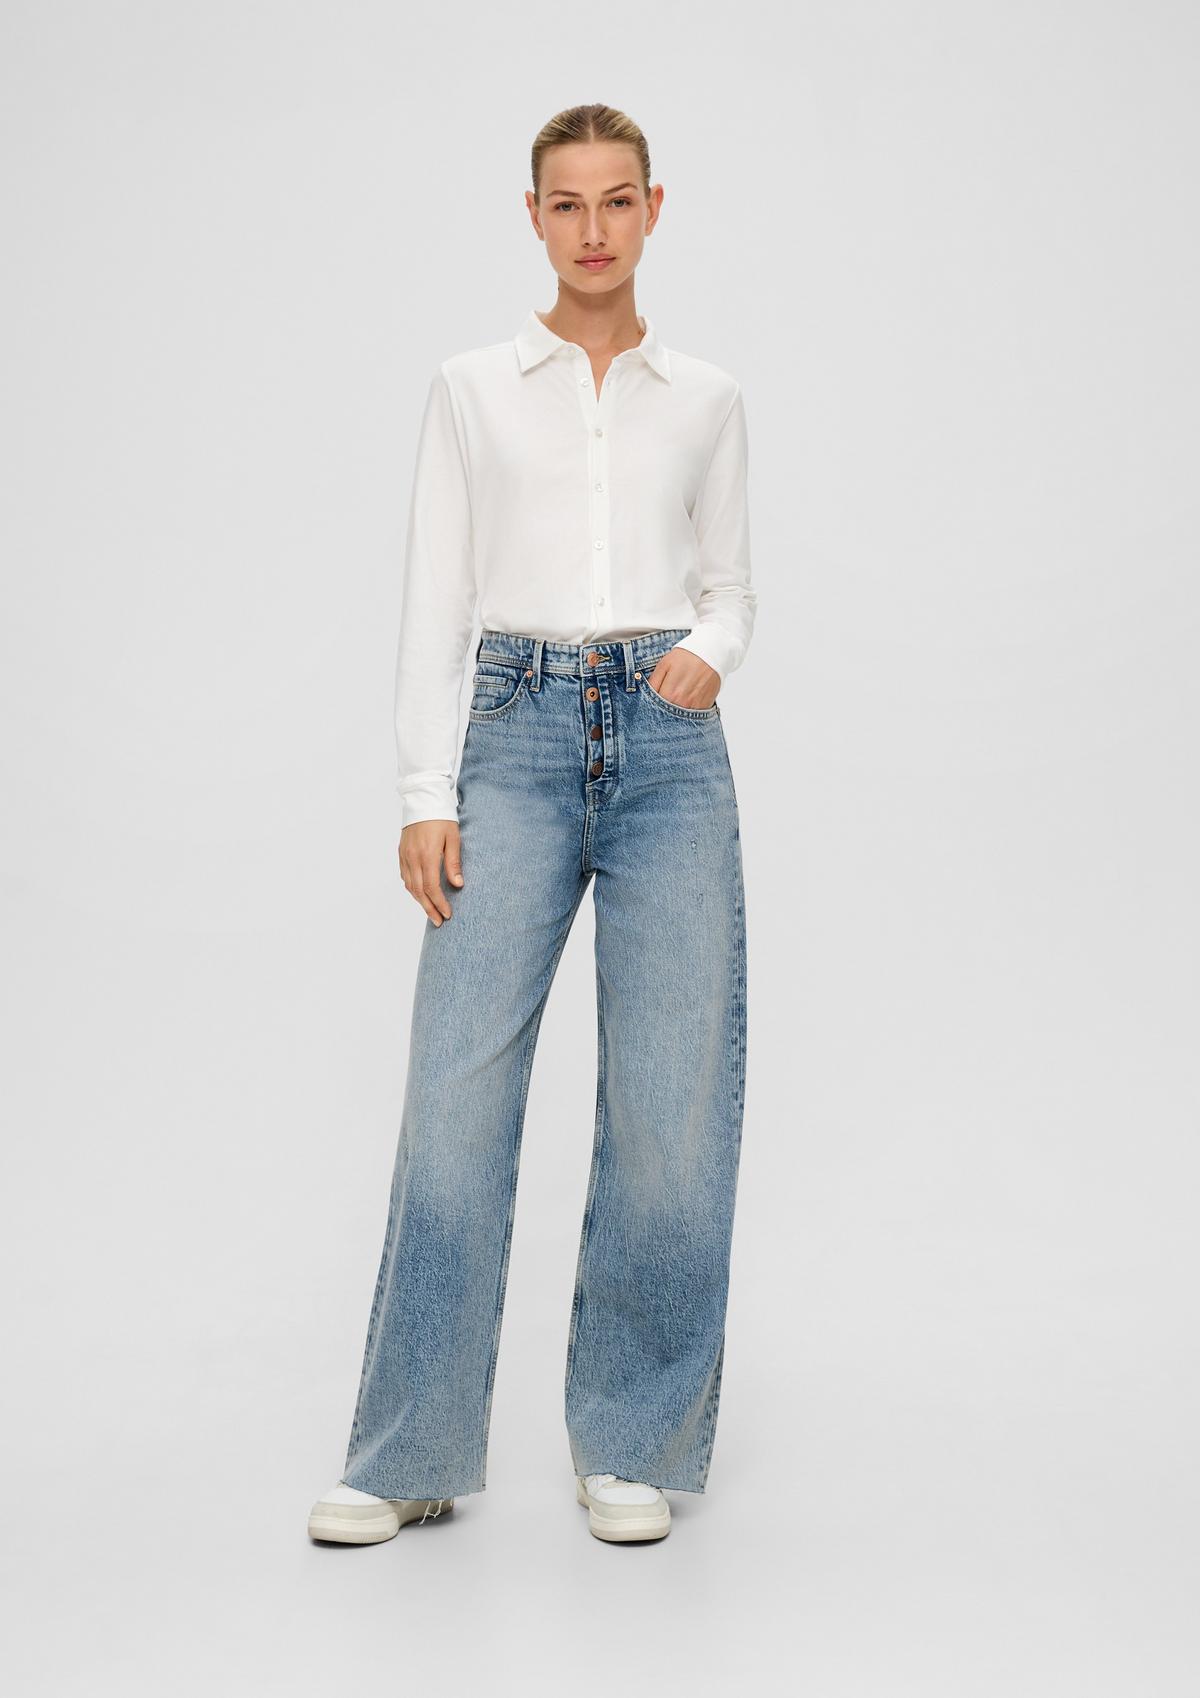 Jeans Suri / regular fit / high rise / wide leg